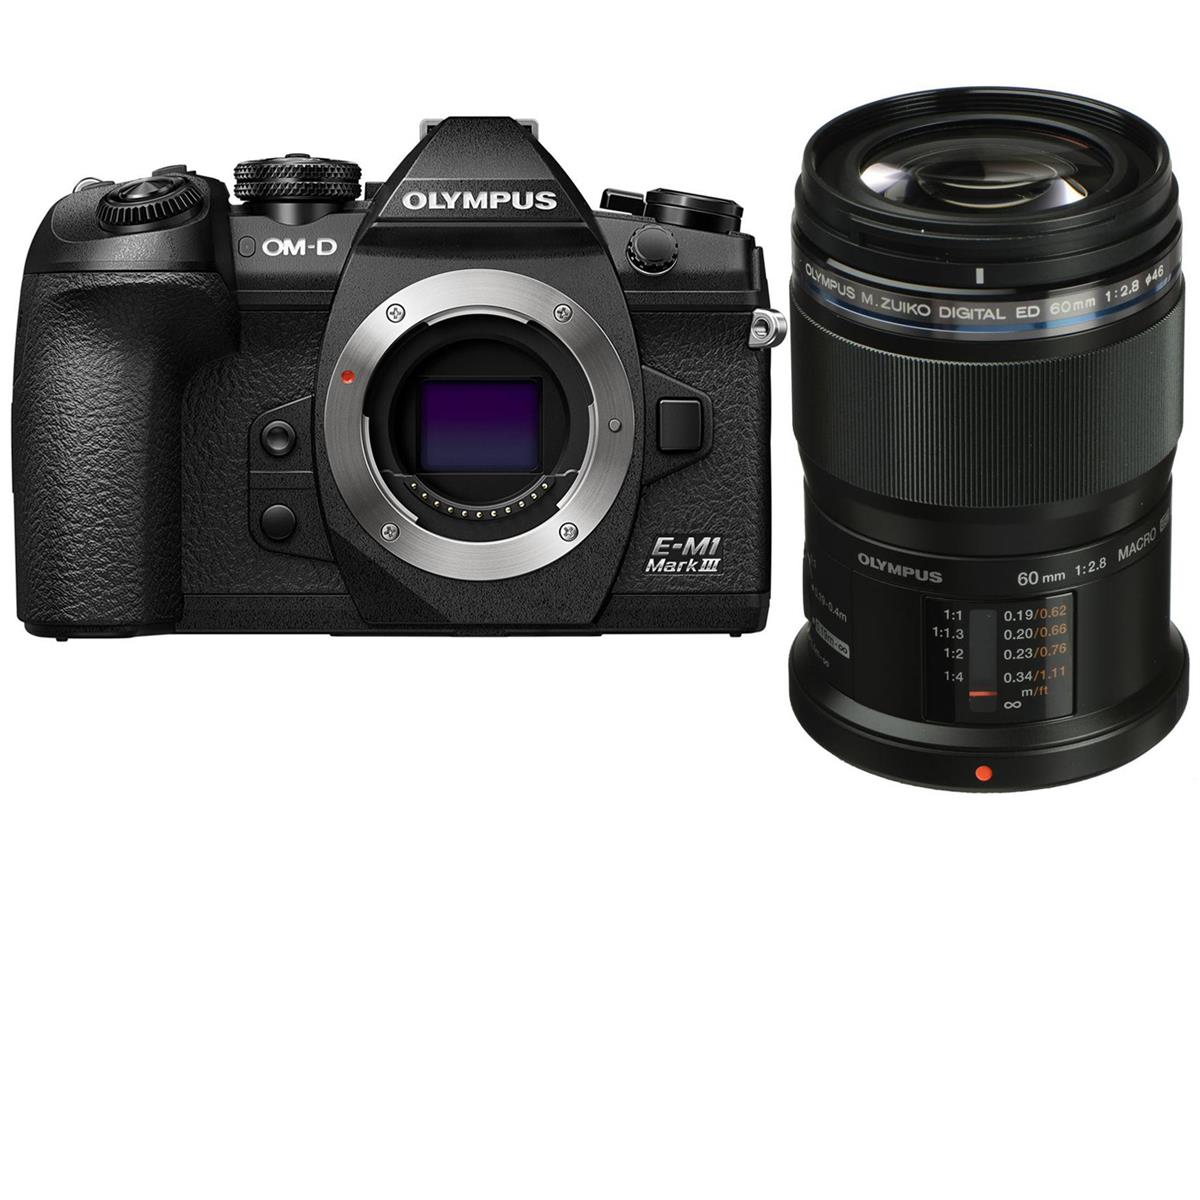 Image of Olympus OM-D E-M1 Mark III Mirrorless Camera